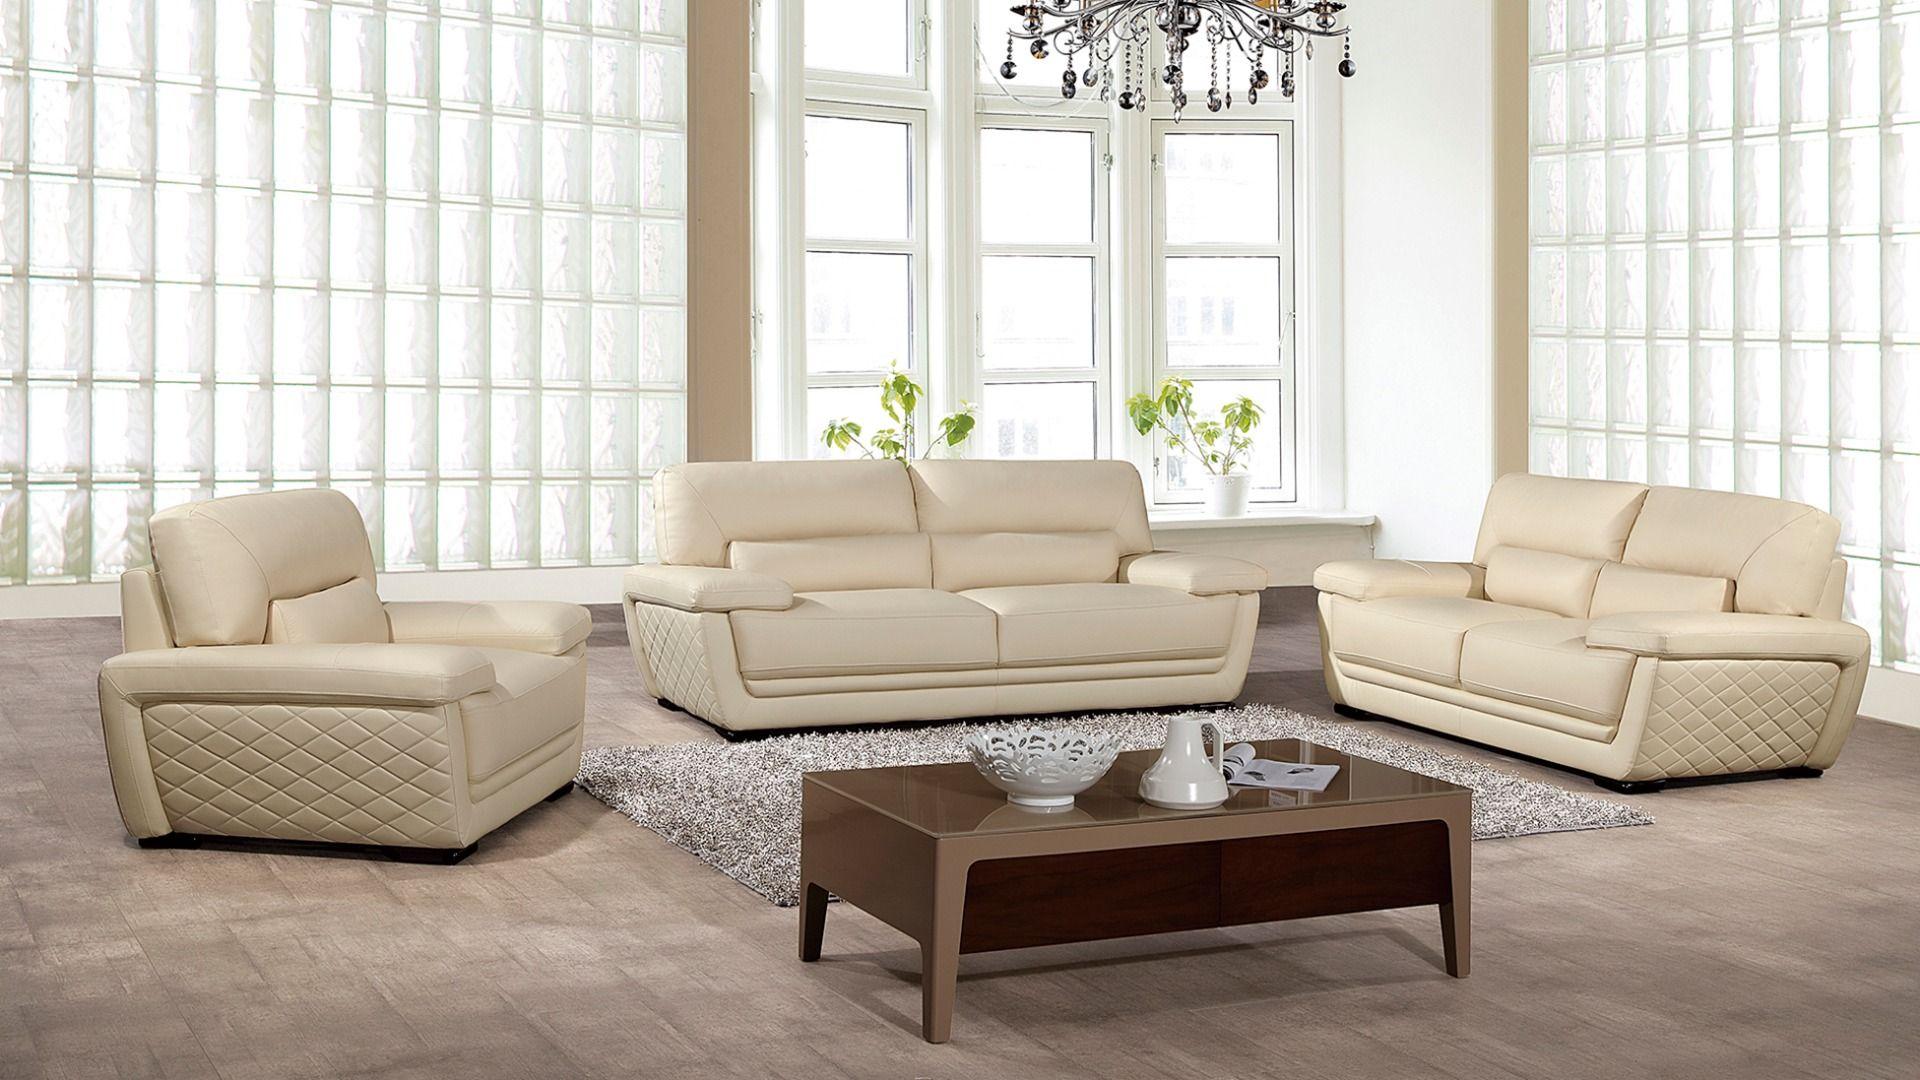 

                    
American Eagle Furniture EK019-CRM Sofa Cream Italian Leather Purchase 
